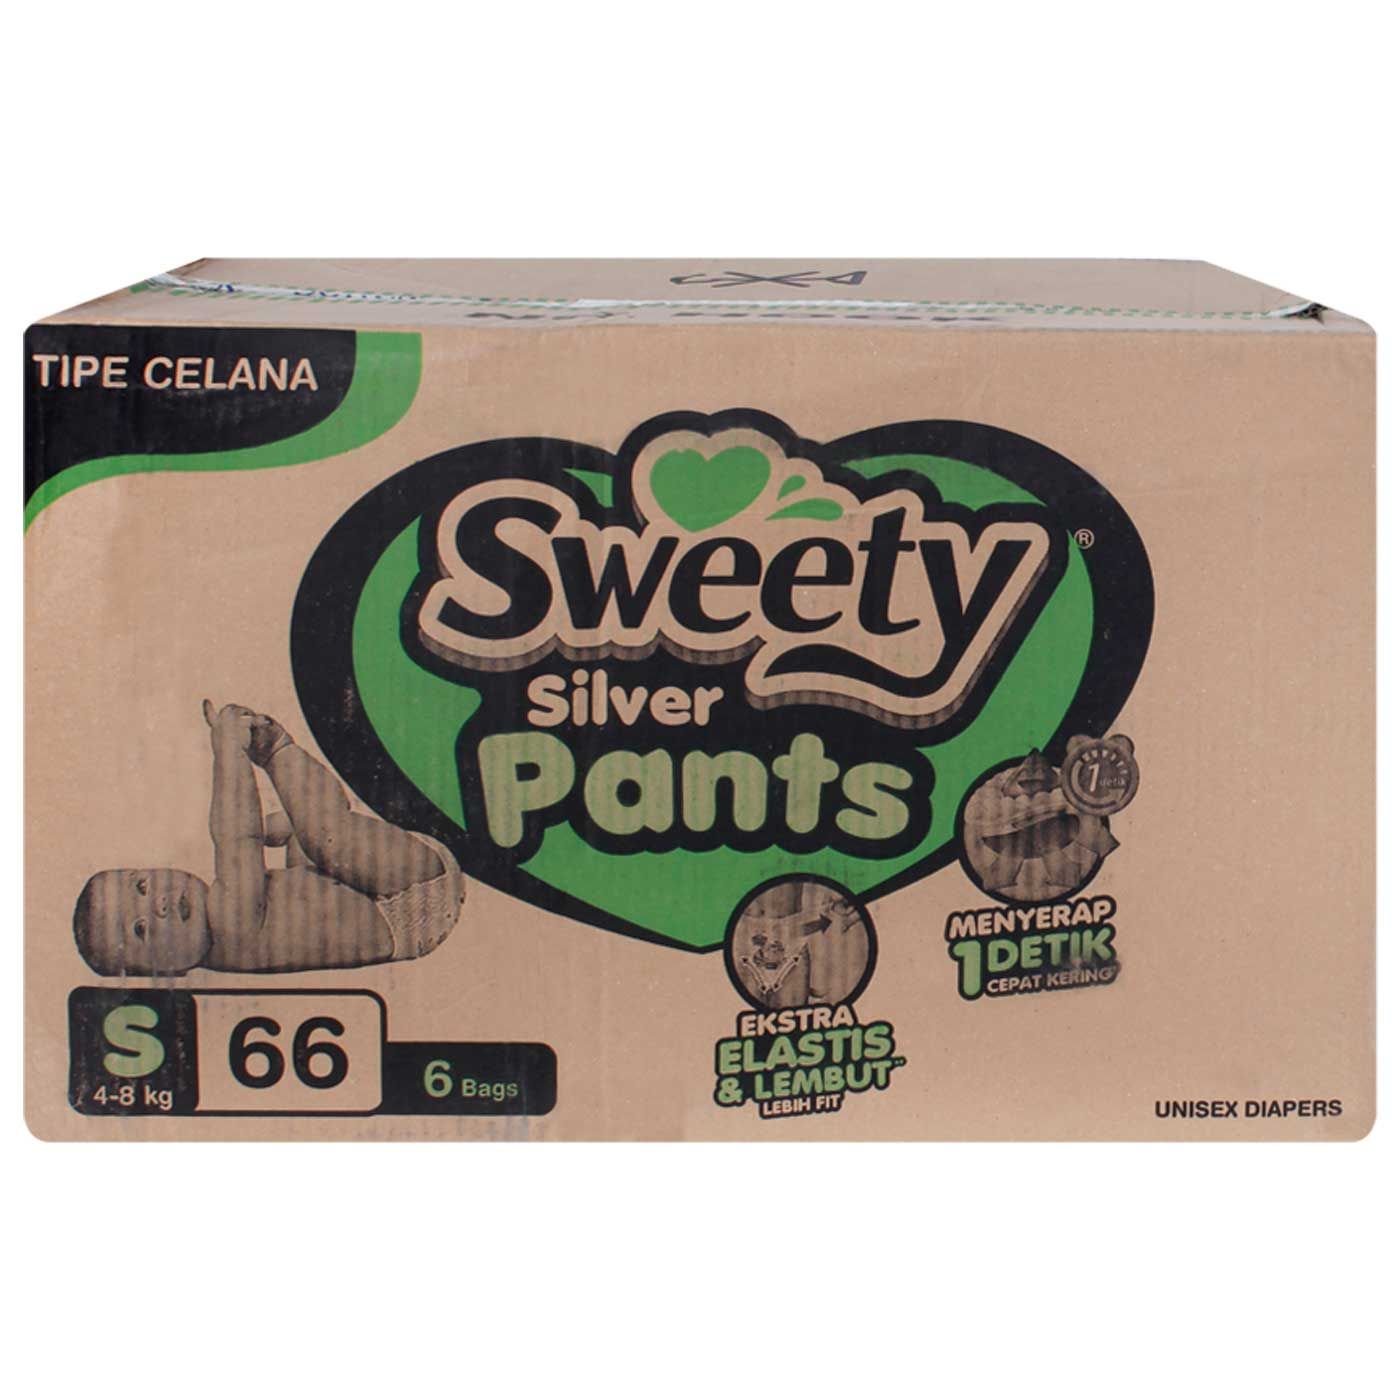 Sweety Silver Pants S 66's - 4